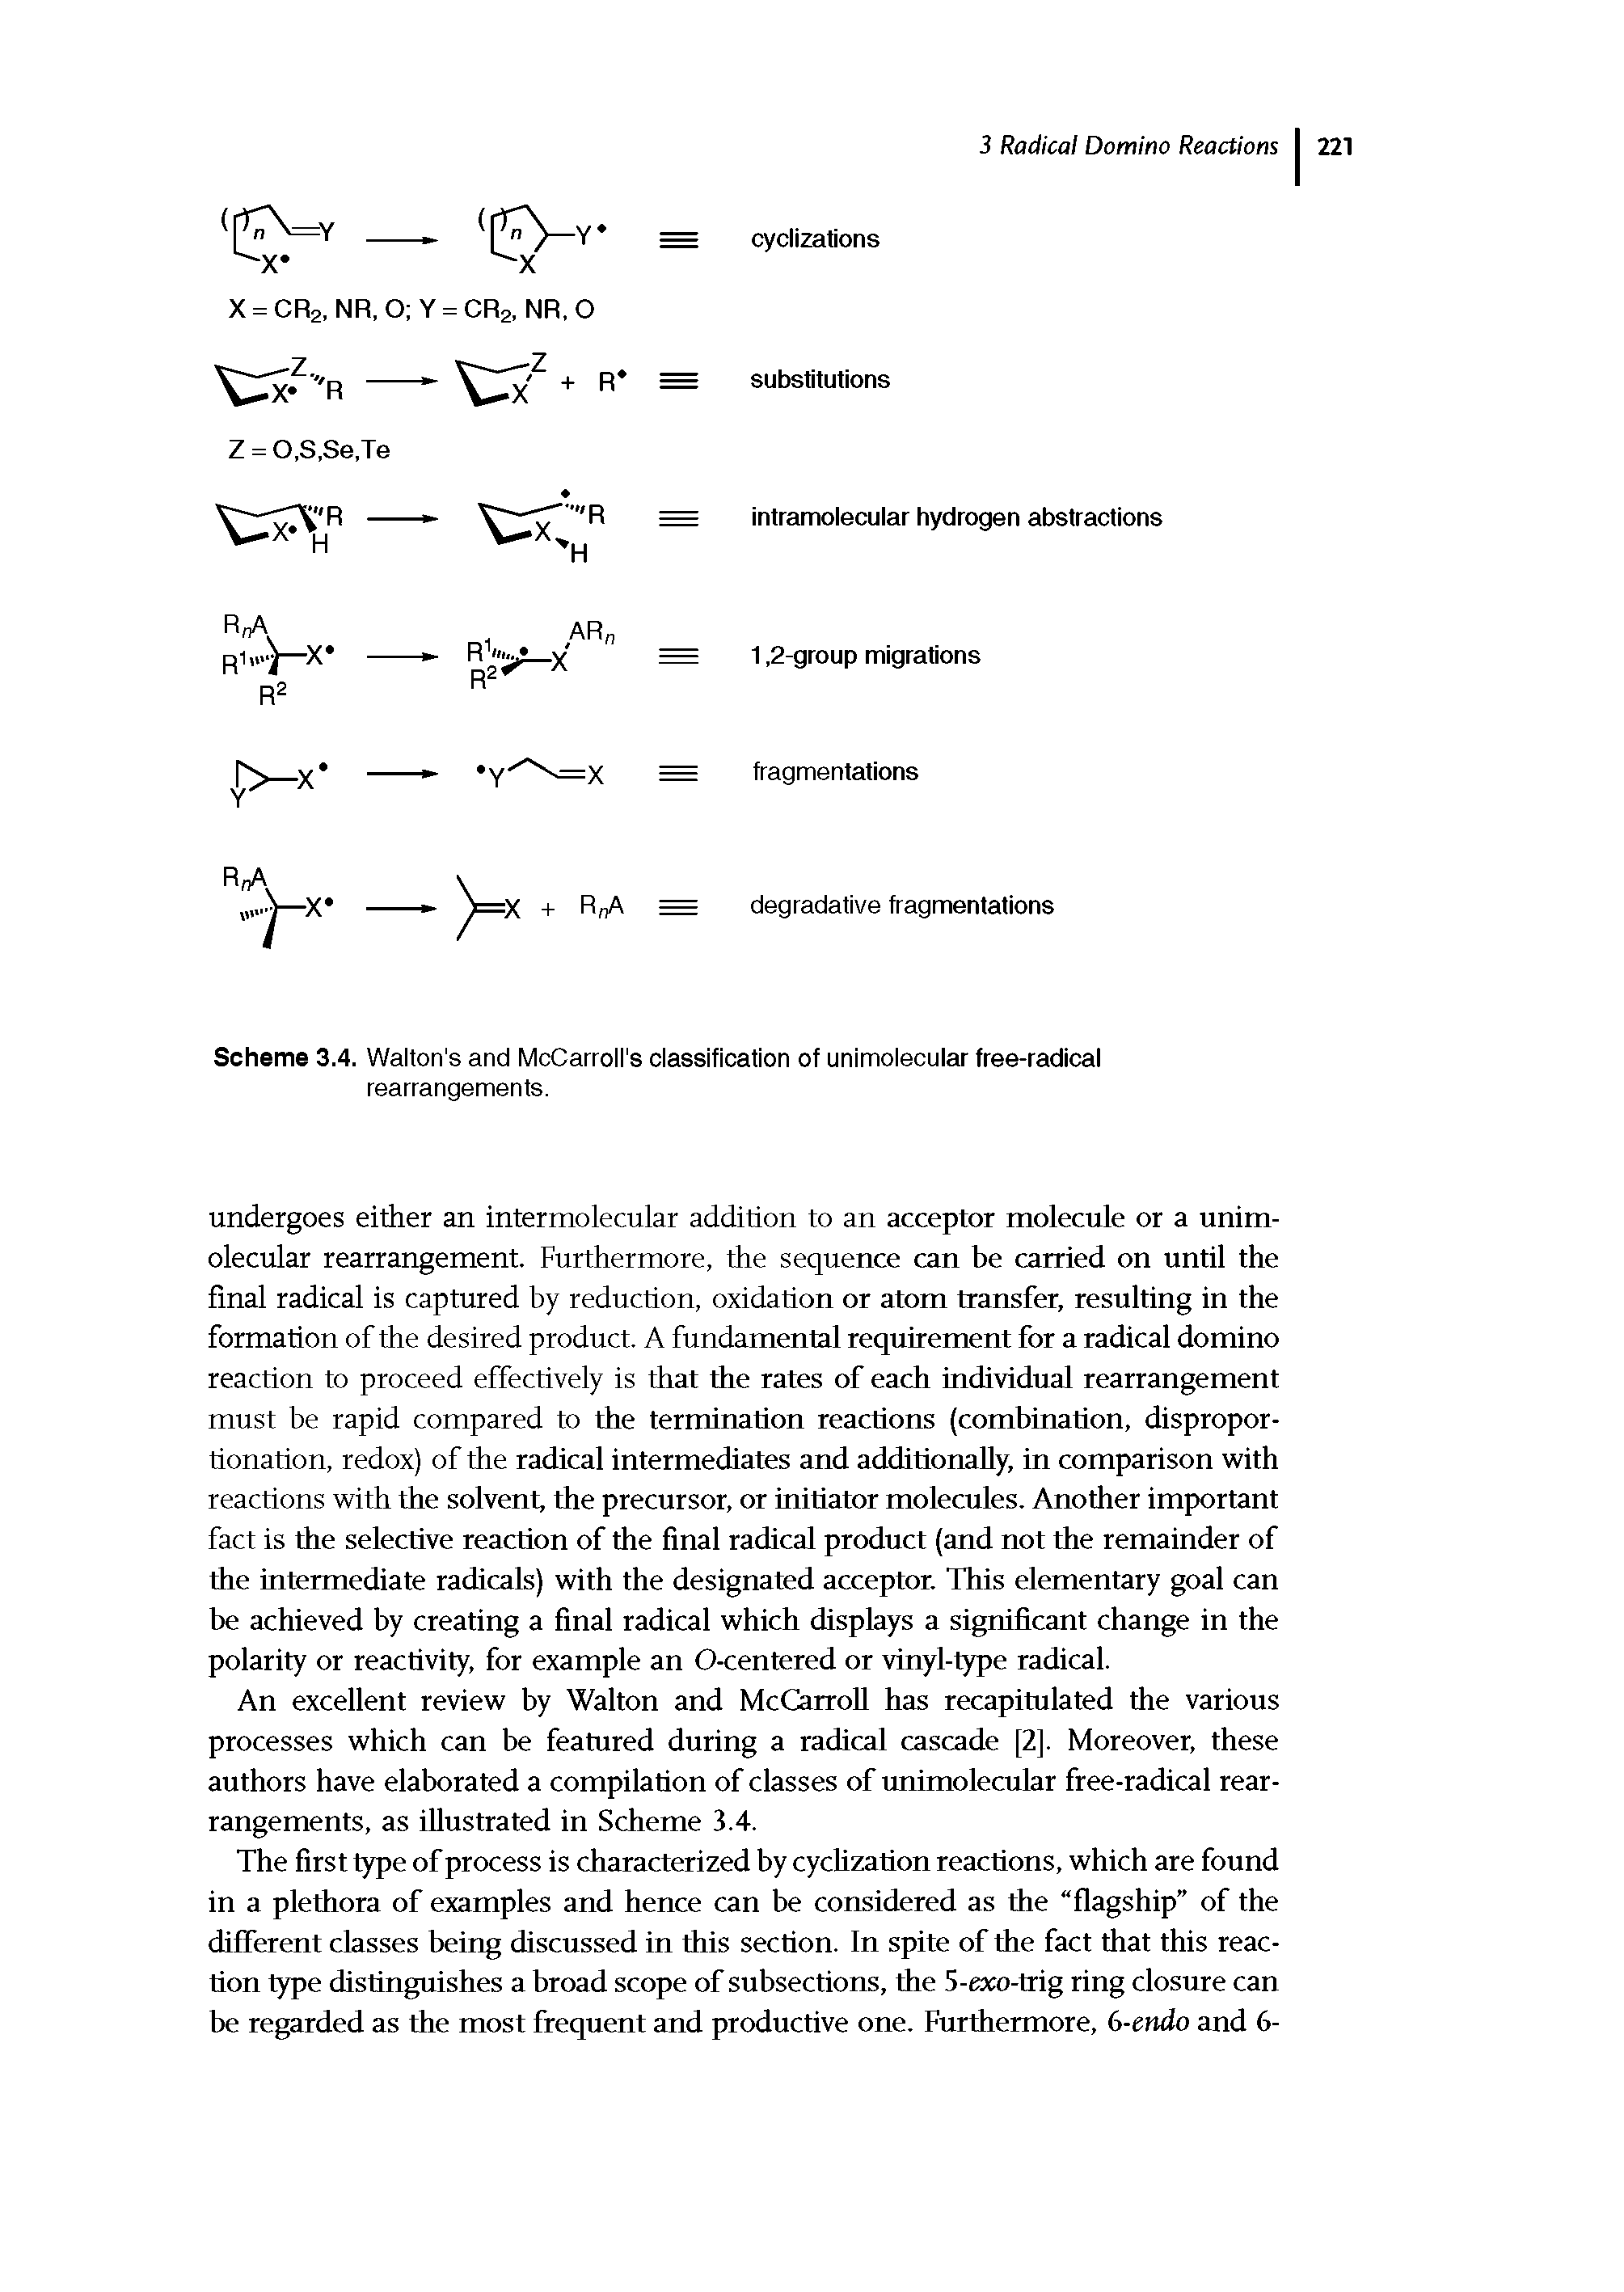 Scheme 3.4. Walton s and McCarroll s classification of unimolecular free-radical rearrangements.